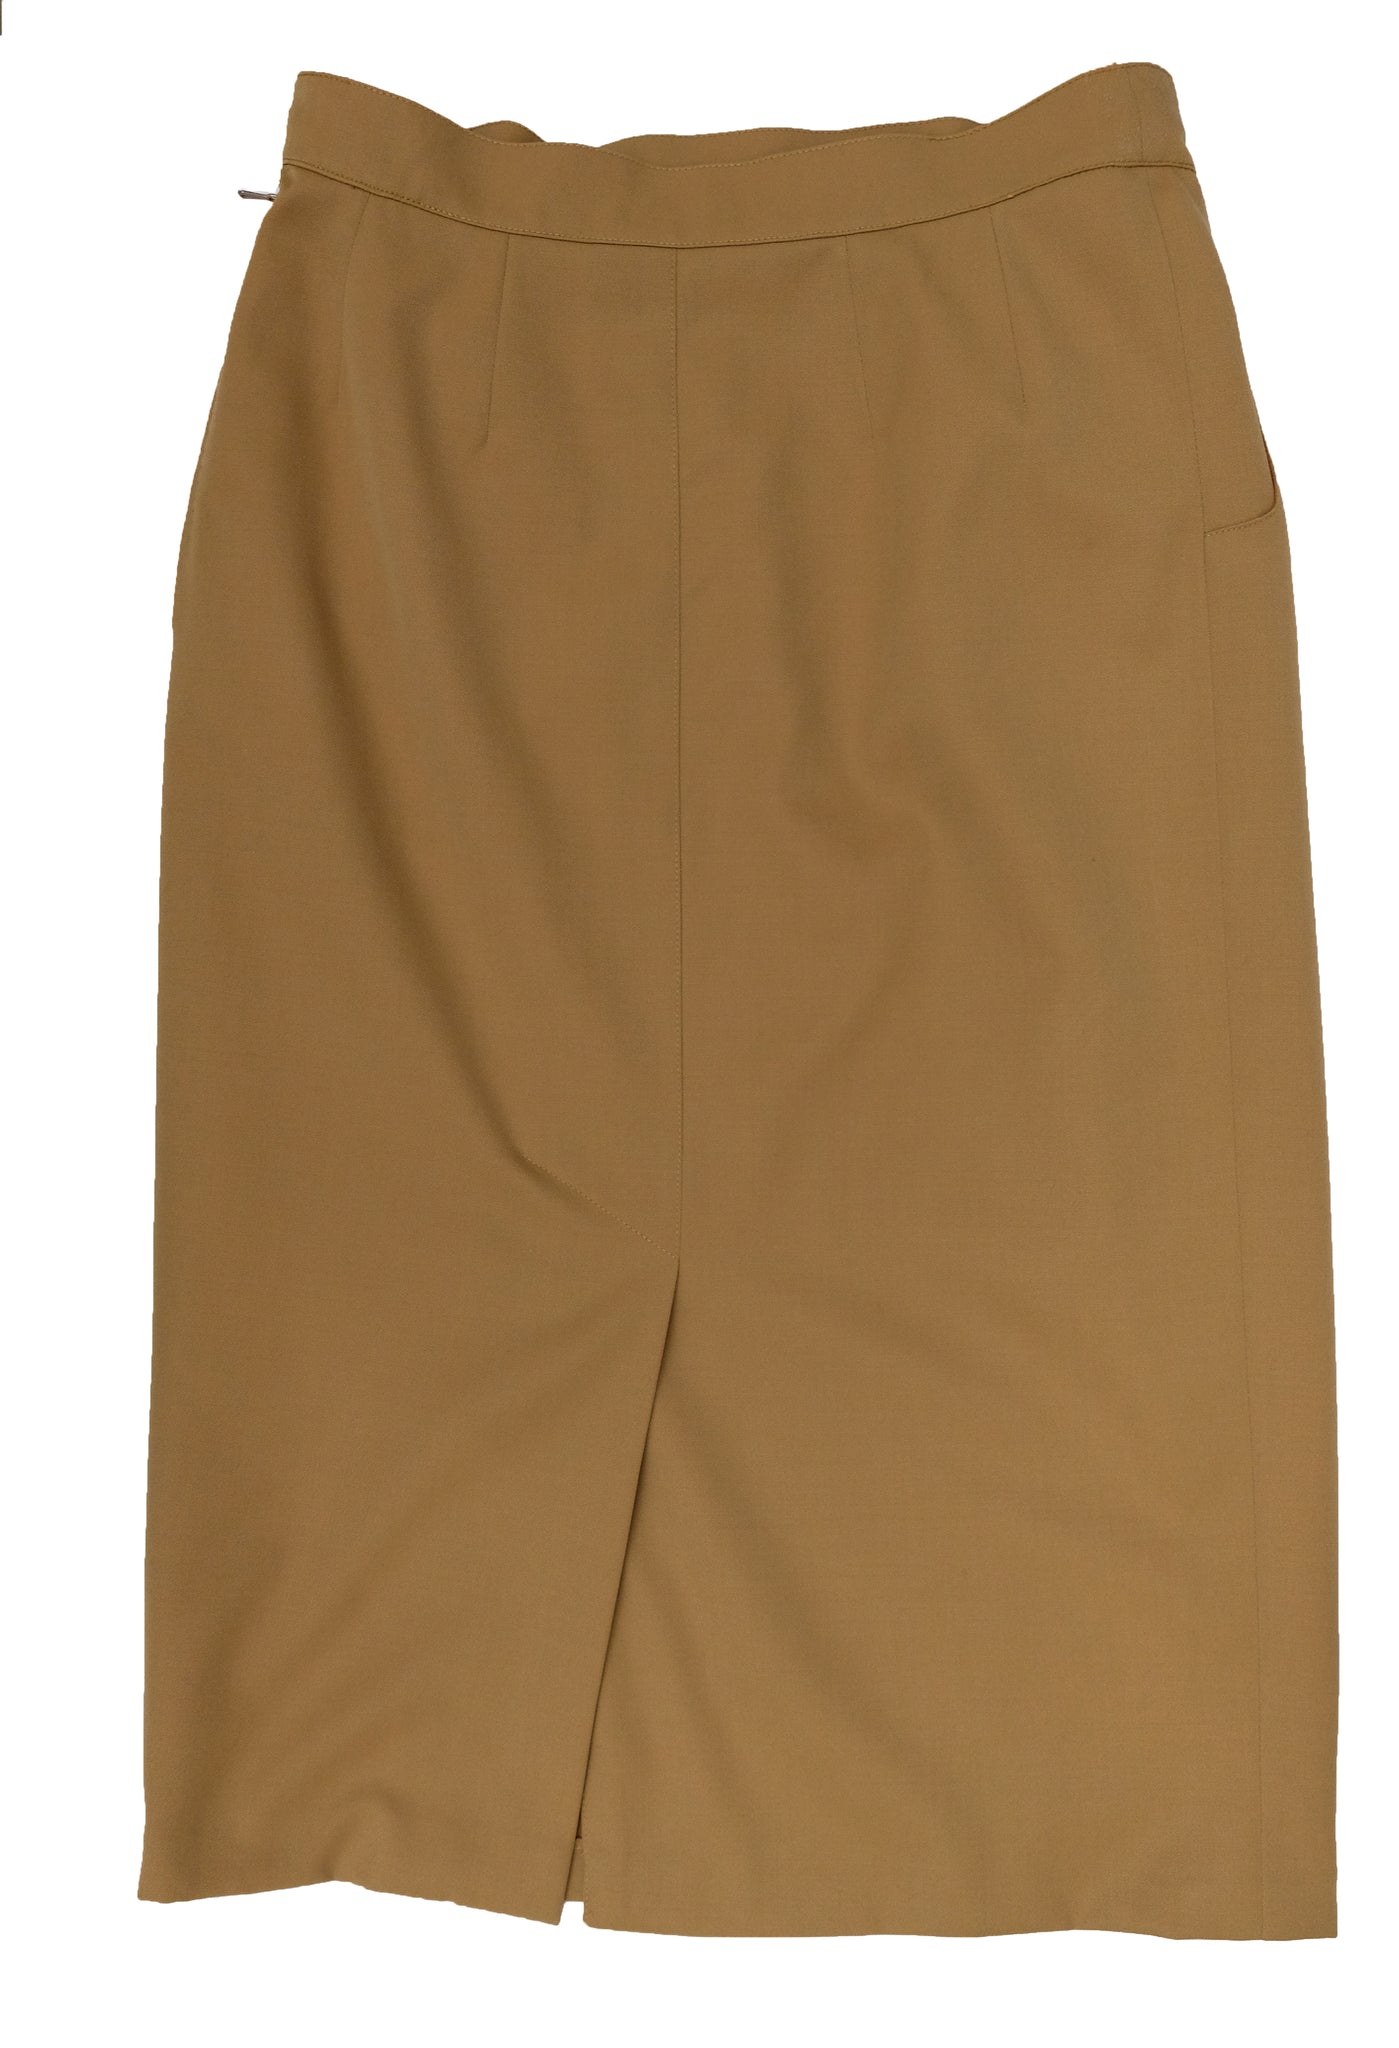 Hermes Vintage Skirt in Camel Wool with Studded Leather Belt, UK10-12 ...